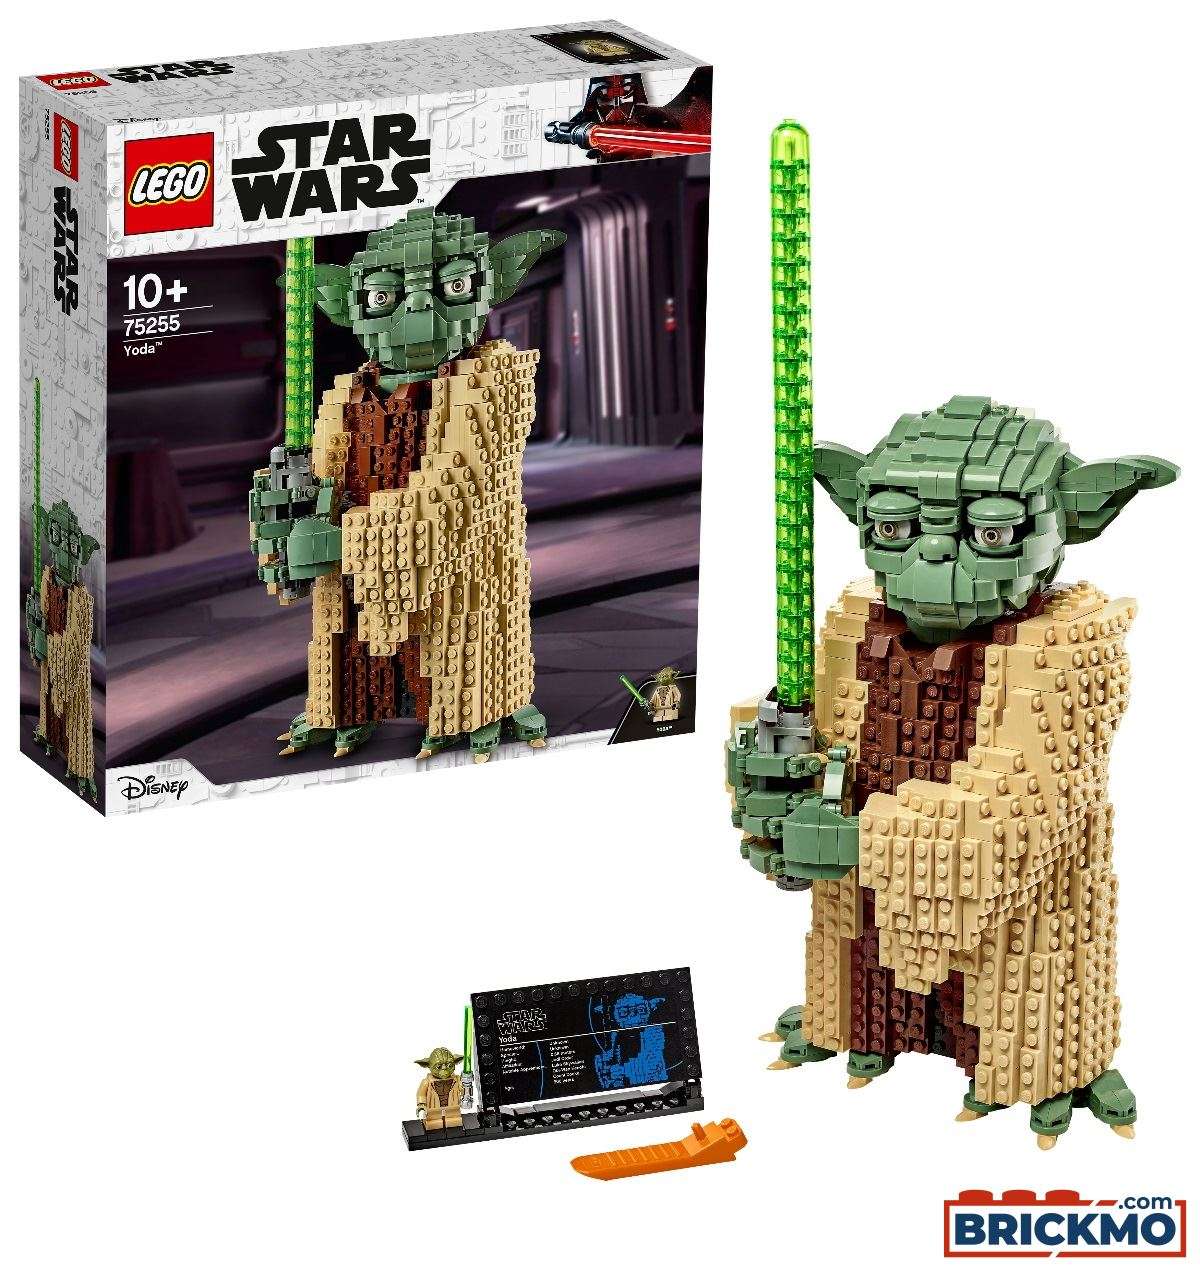 LEGO Star Wars 75255 Yoda 75255